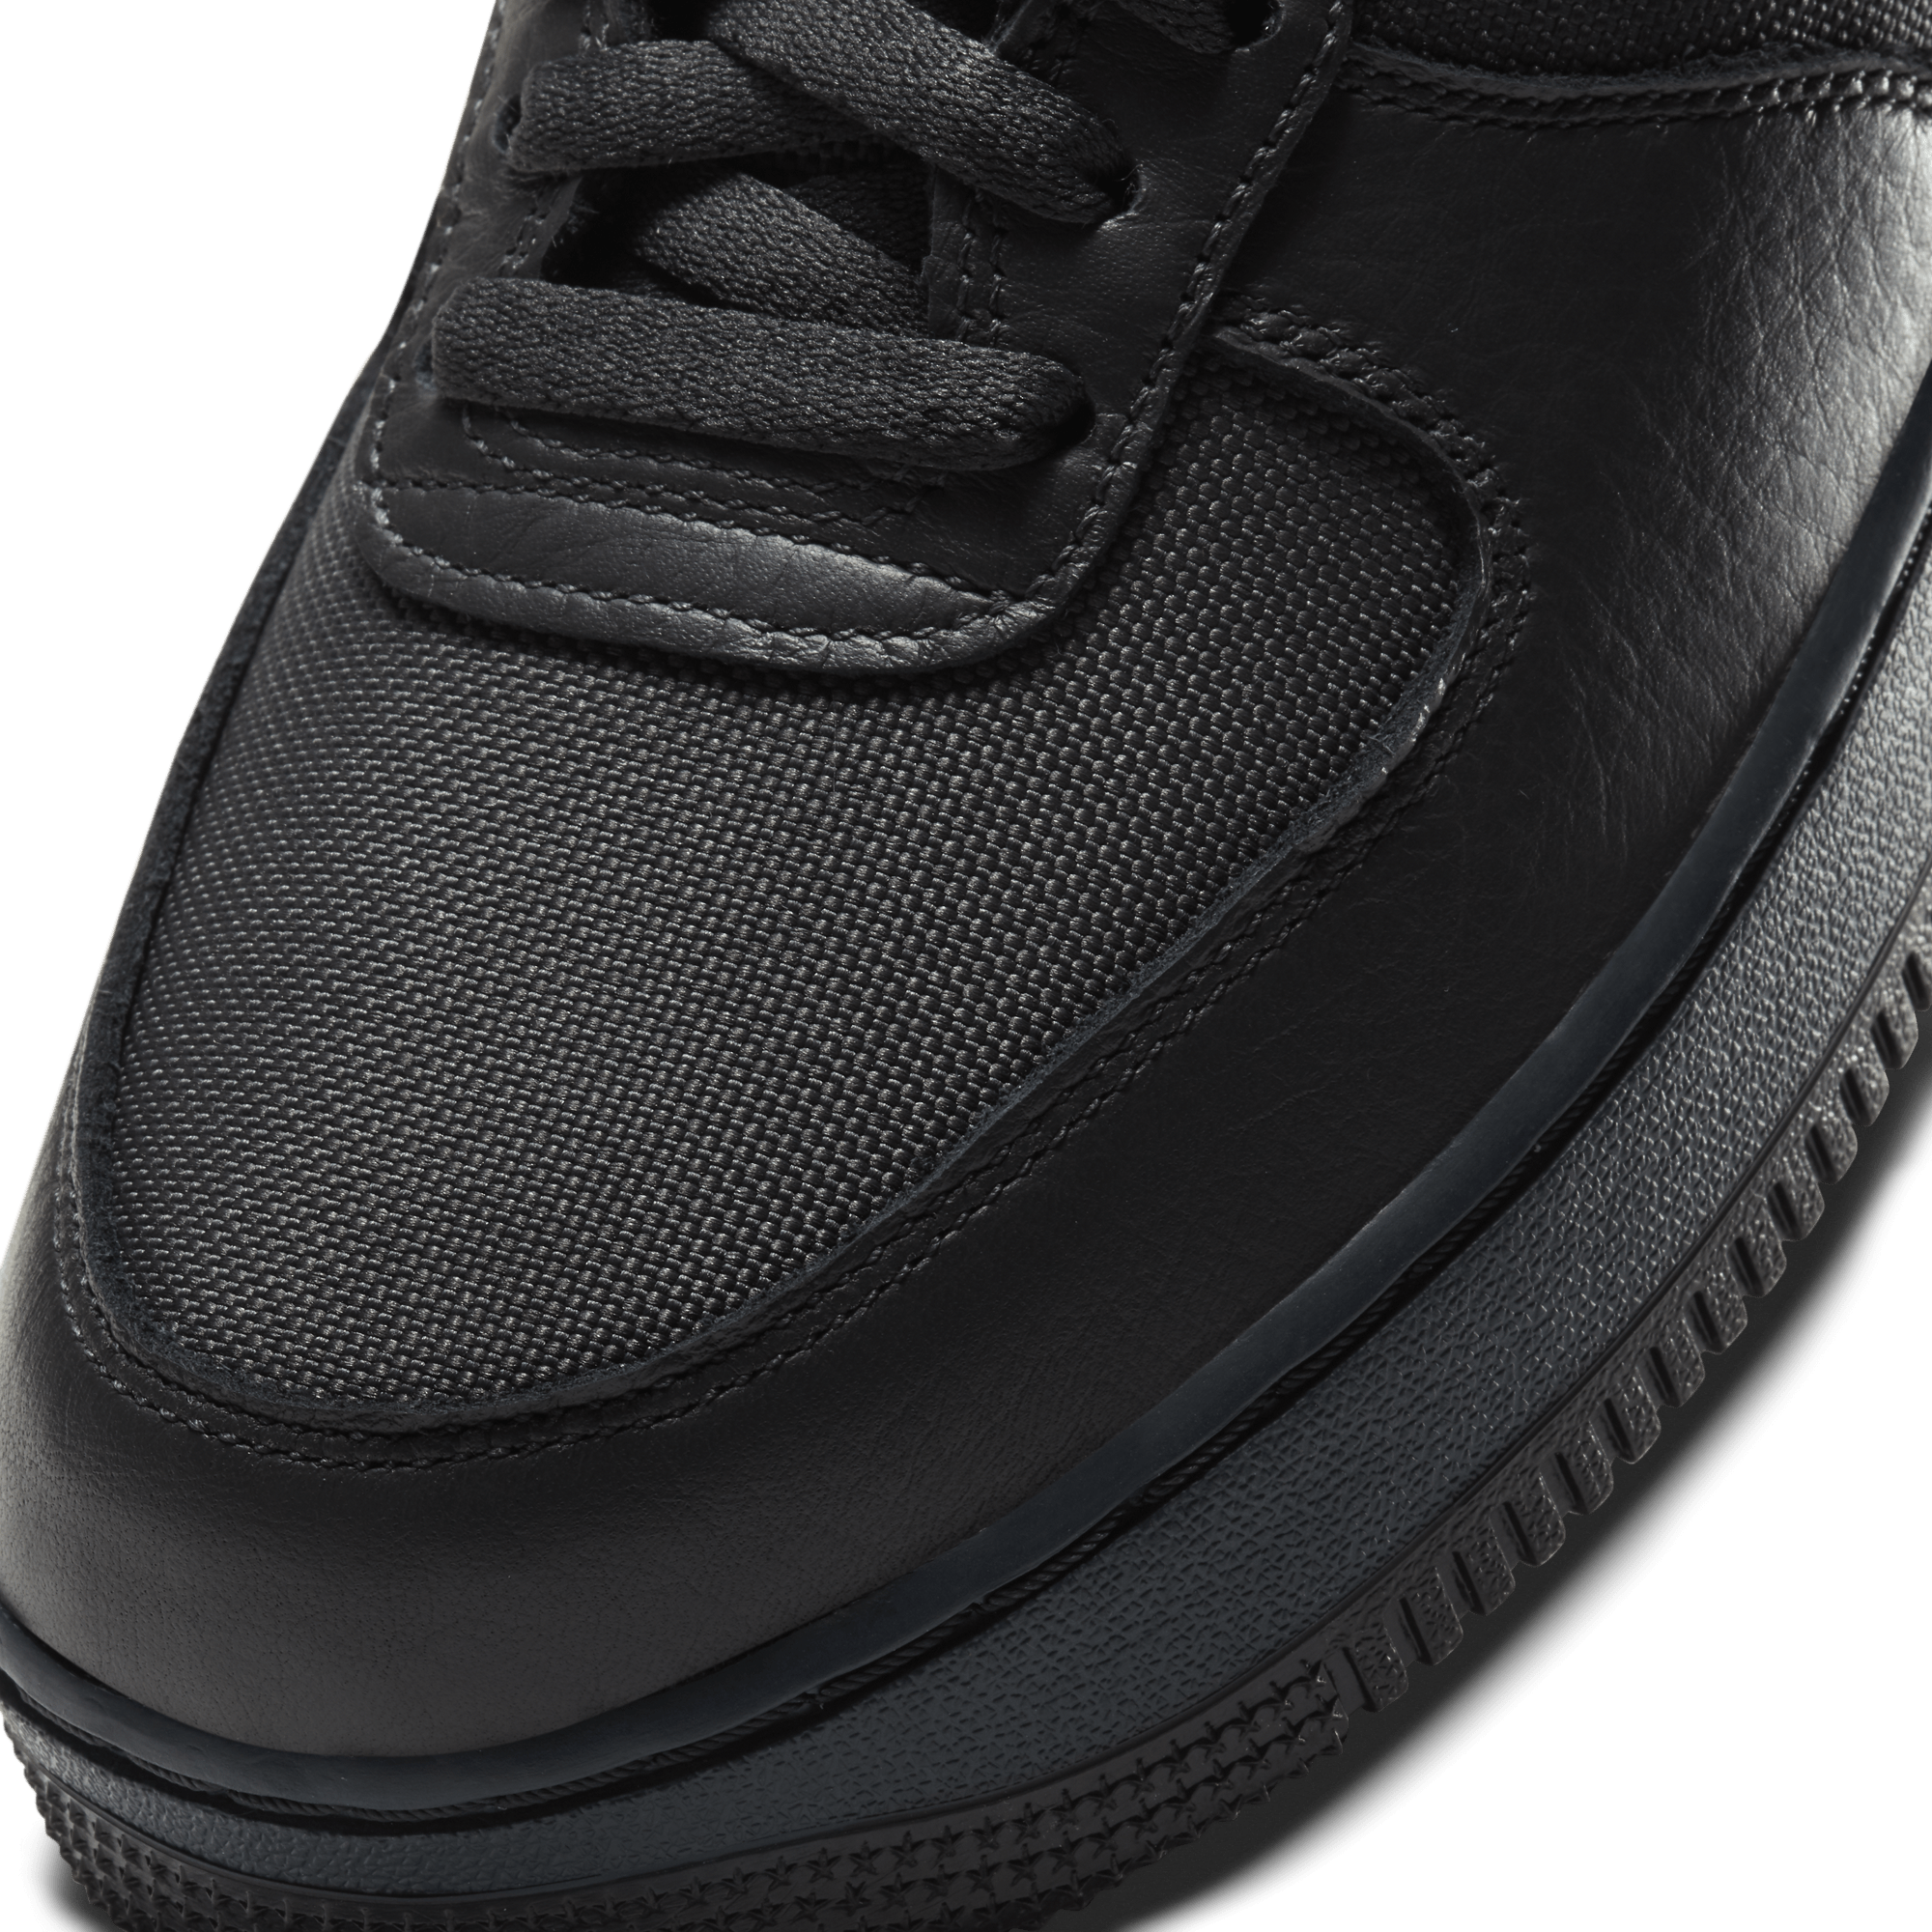 Nike Air Force 1 '07 Lv8 Utility Sneaker in Black for Men